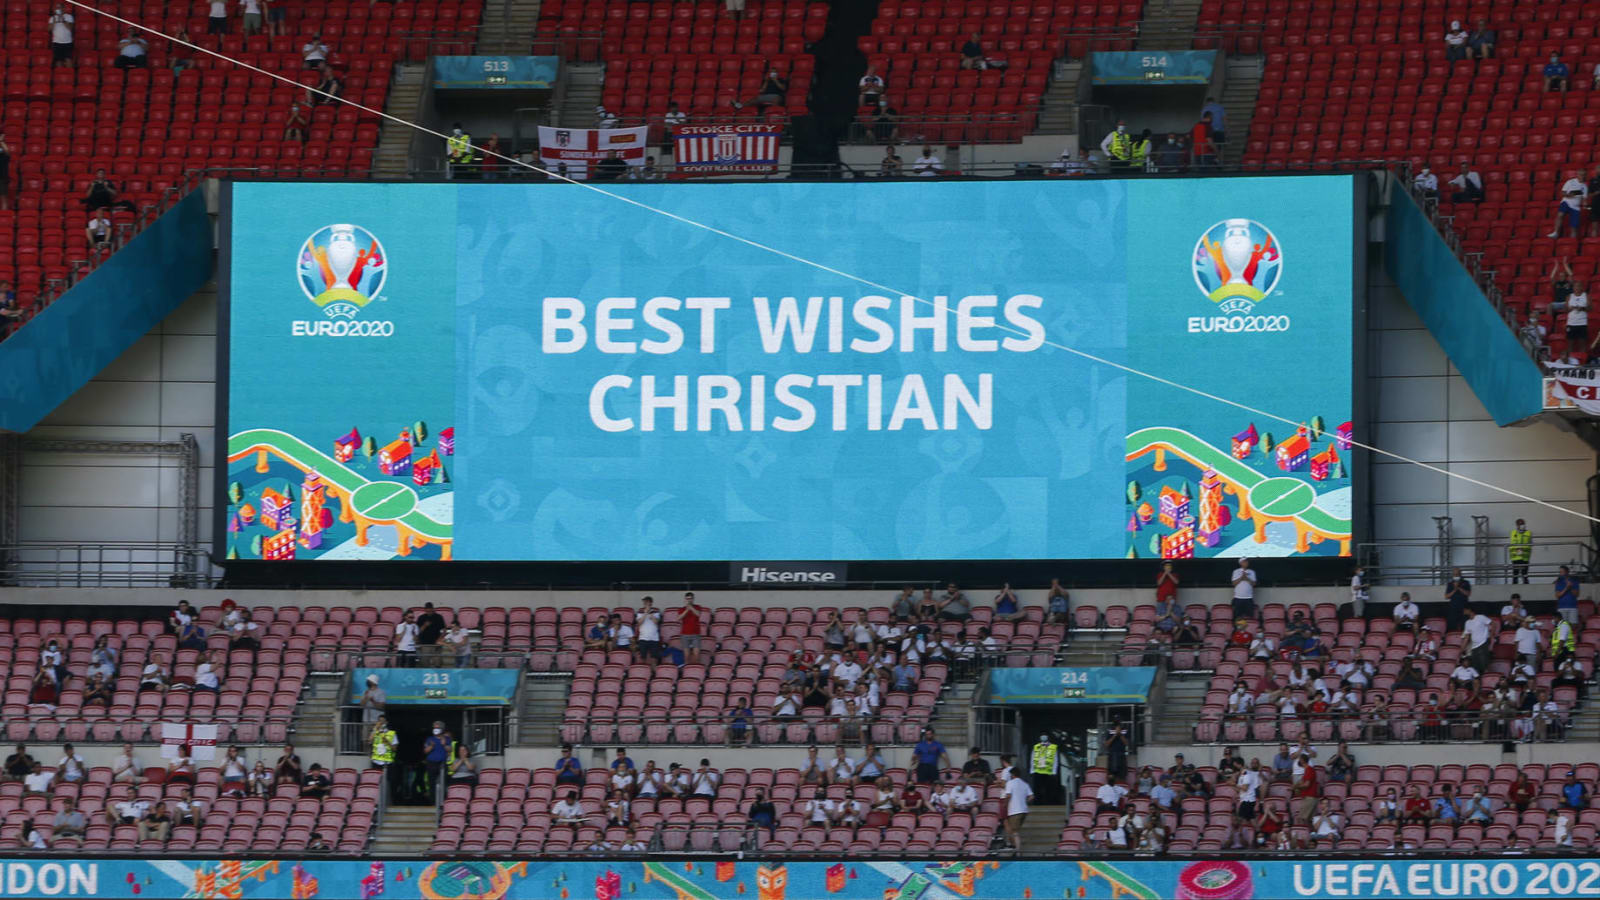 Denmark, Belgium to honor Eriksen during Euro match